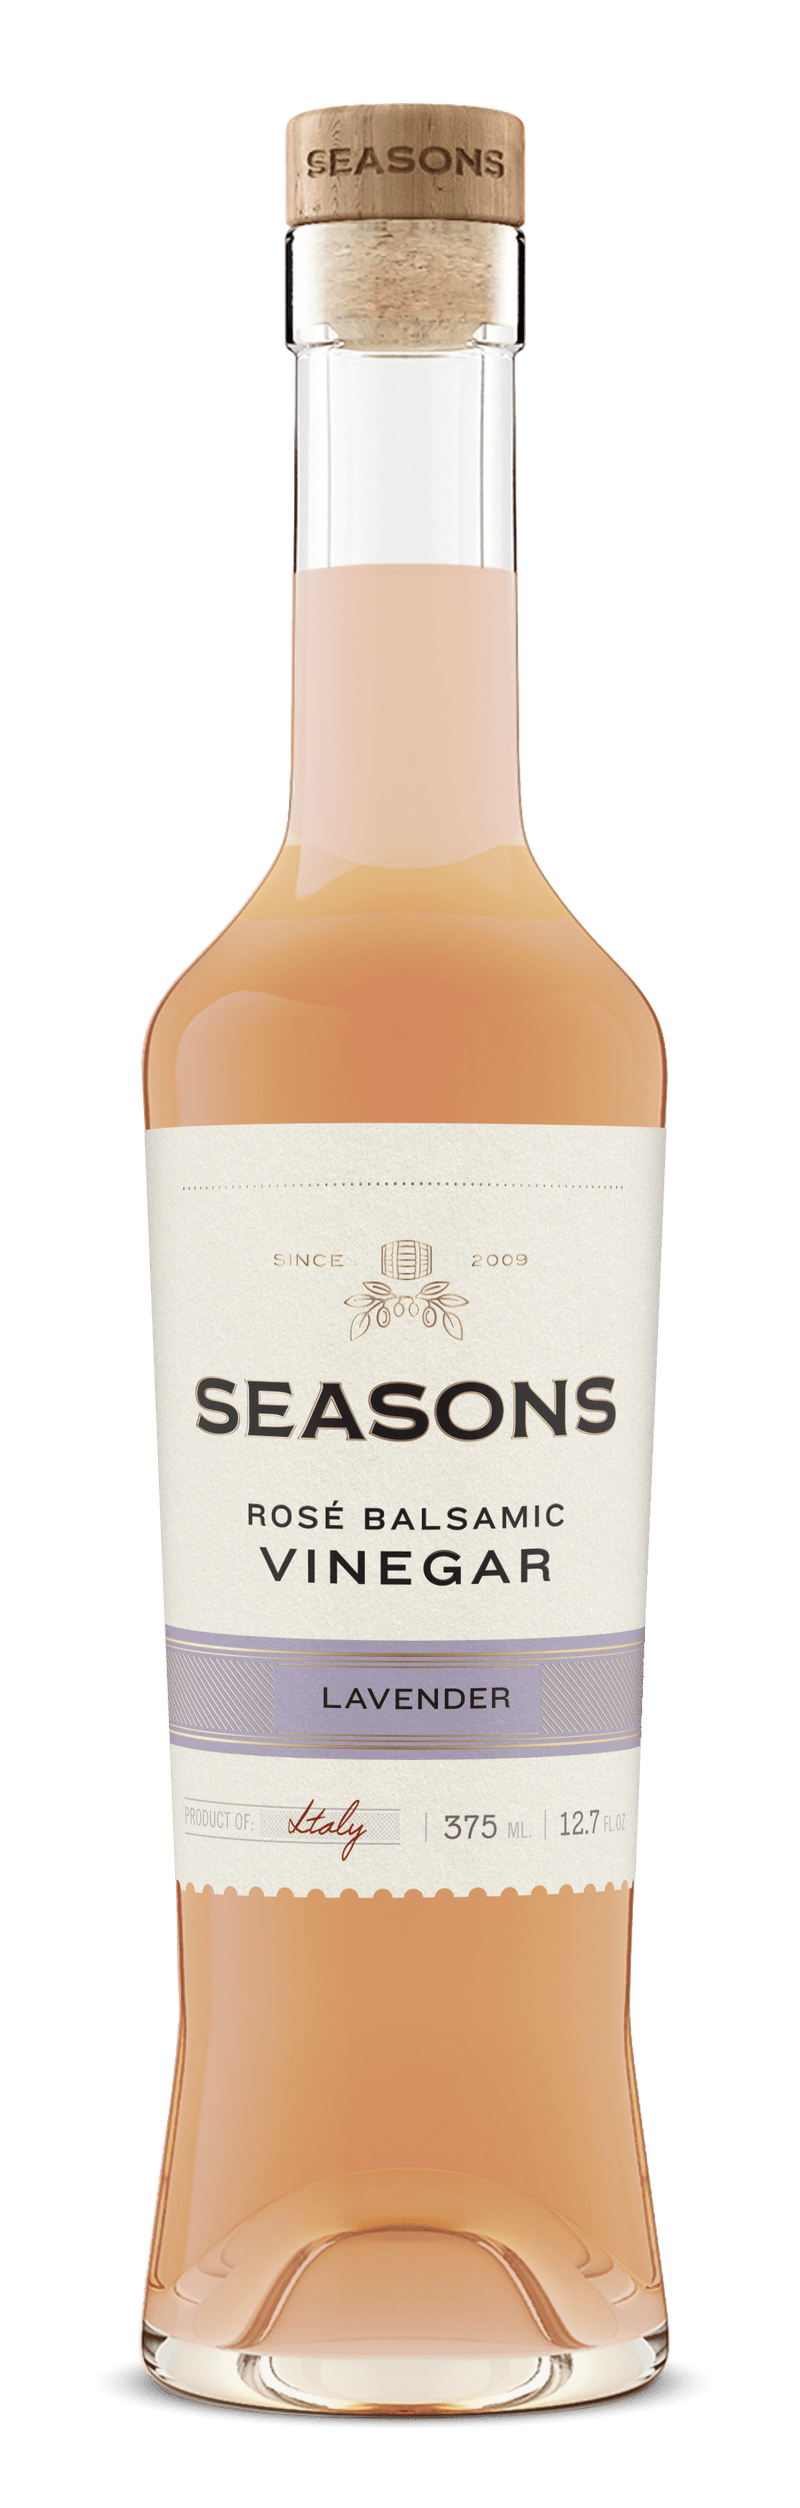 Seasons Olive Oil & Vinegar Lavender Rosé Balsamic Vinegar